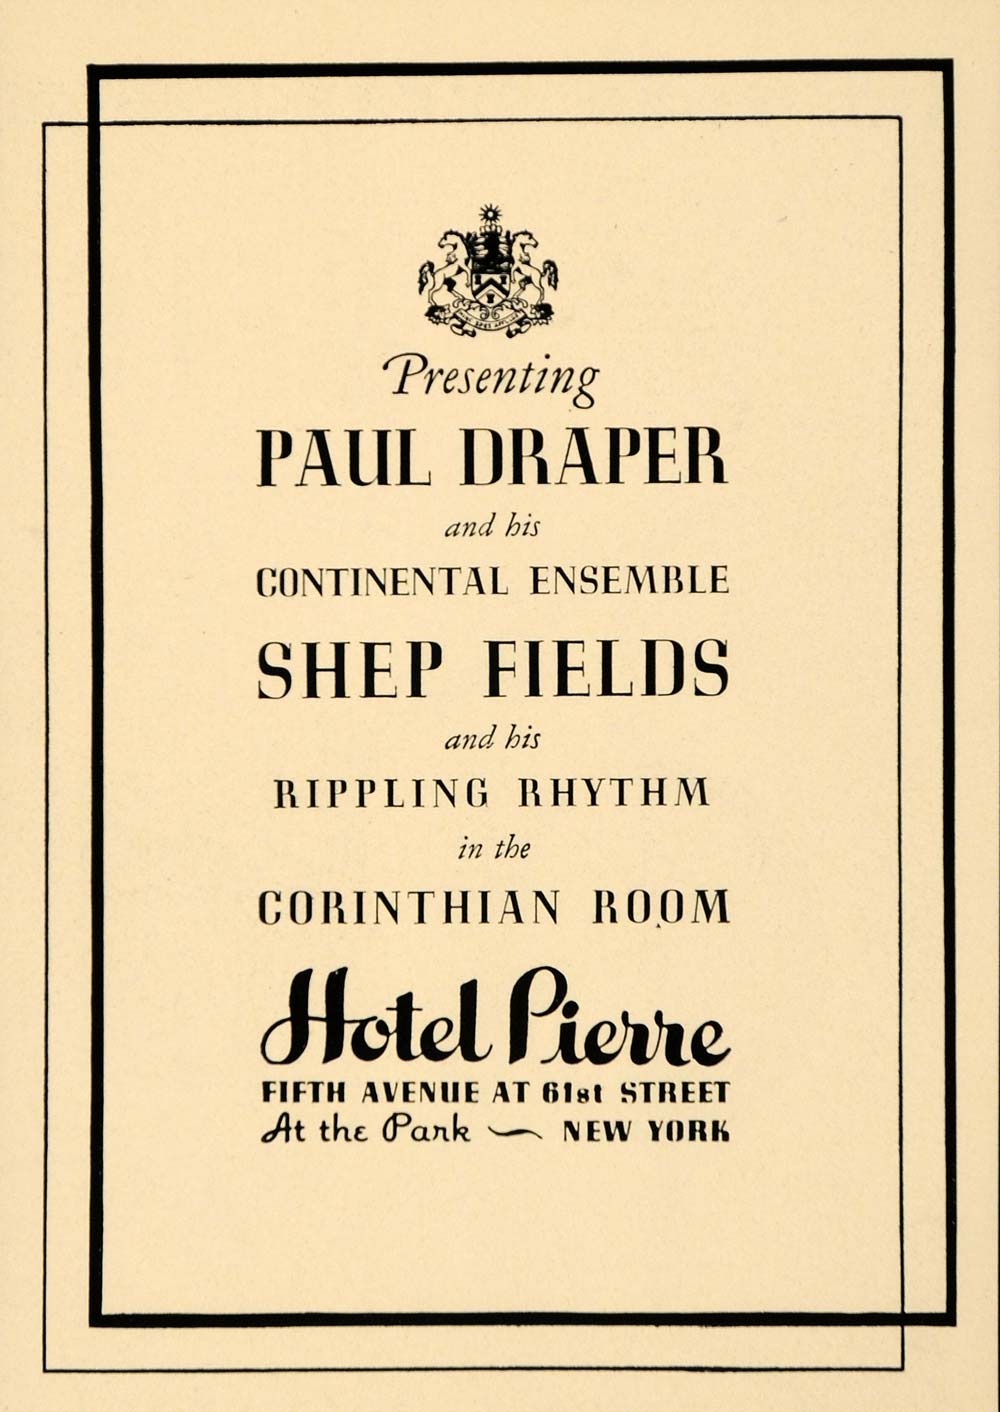 1936 Ad Hotel Pierre Shep Fields Paul Draper Ensemble - ORIGINAL ADVERTISING FT9